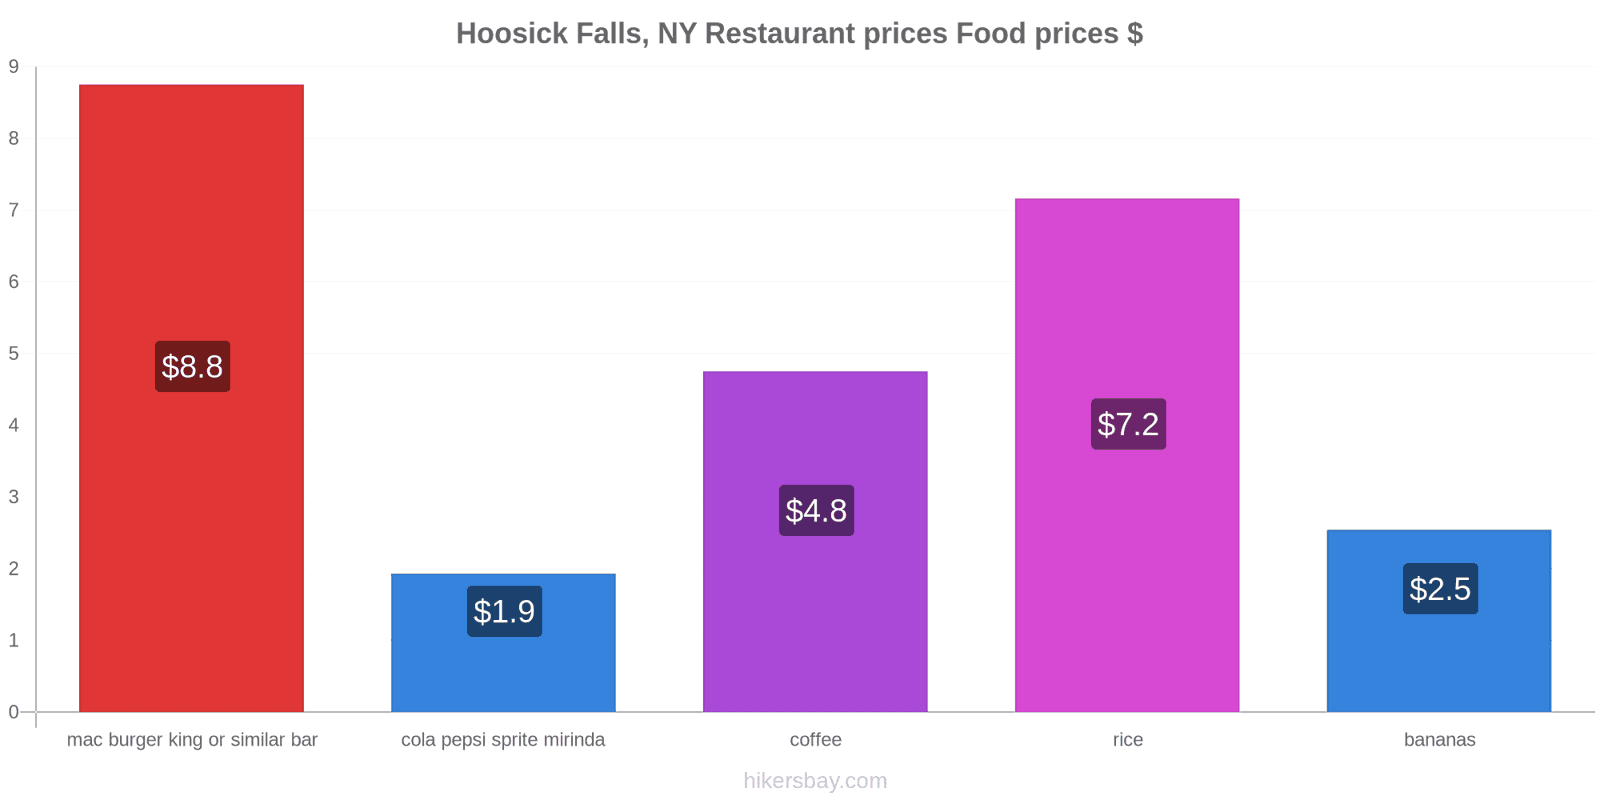 Hoosick Falls, NY price changes hikersbay.com